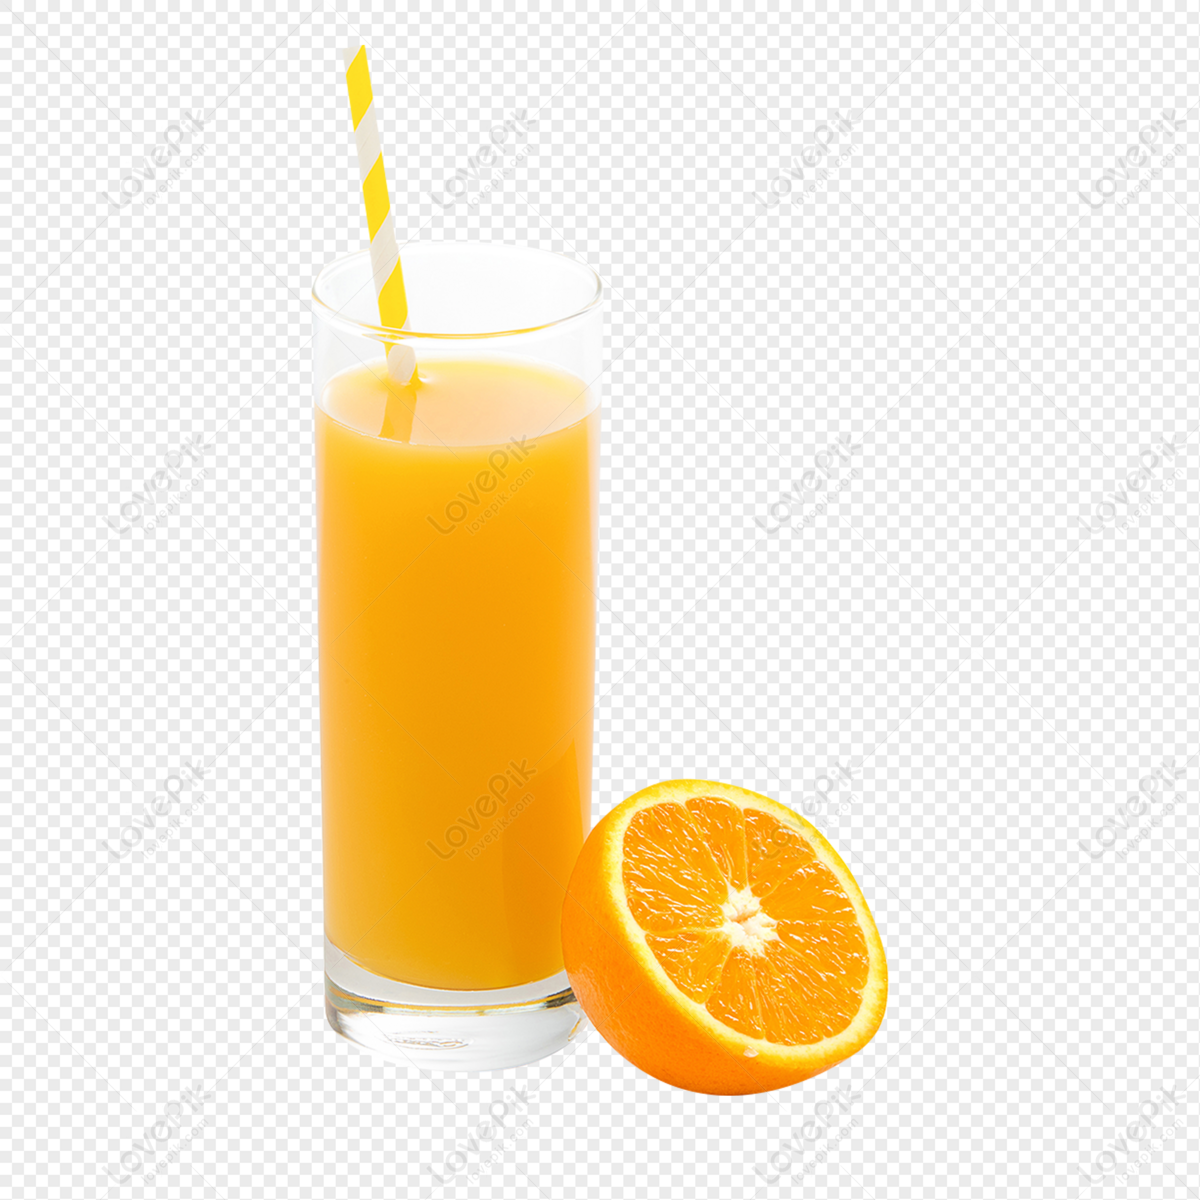 Fresh Orange Juice PNG Transparent Background And Clipart Image For Free  Download - Lovepik | 401942830